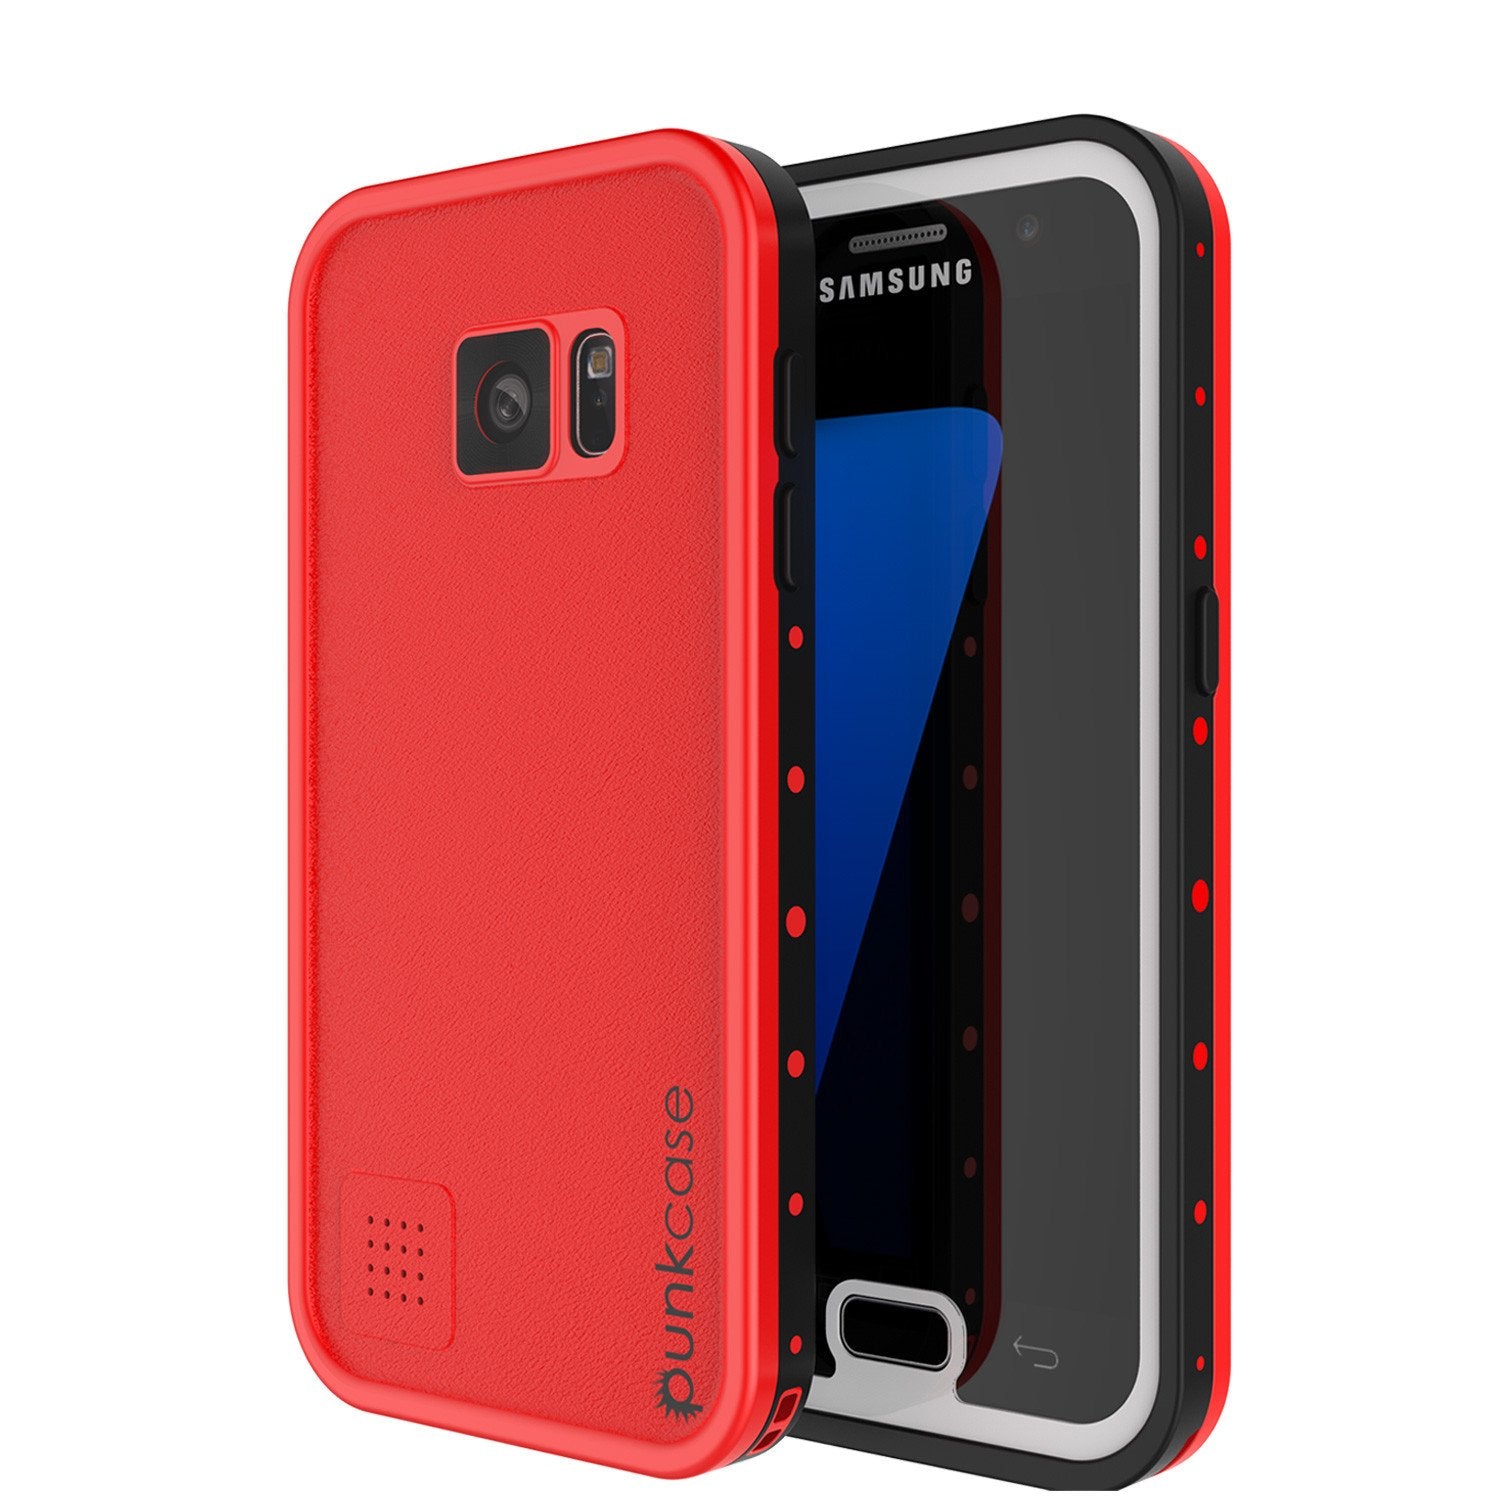 Galaxy S7 Waterproof Case PunkCase StudStar Red Thin 6.6ft Underwater IP68 Shock/Dirt/Snow Proof